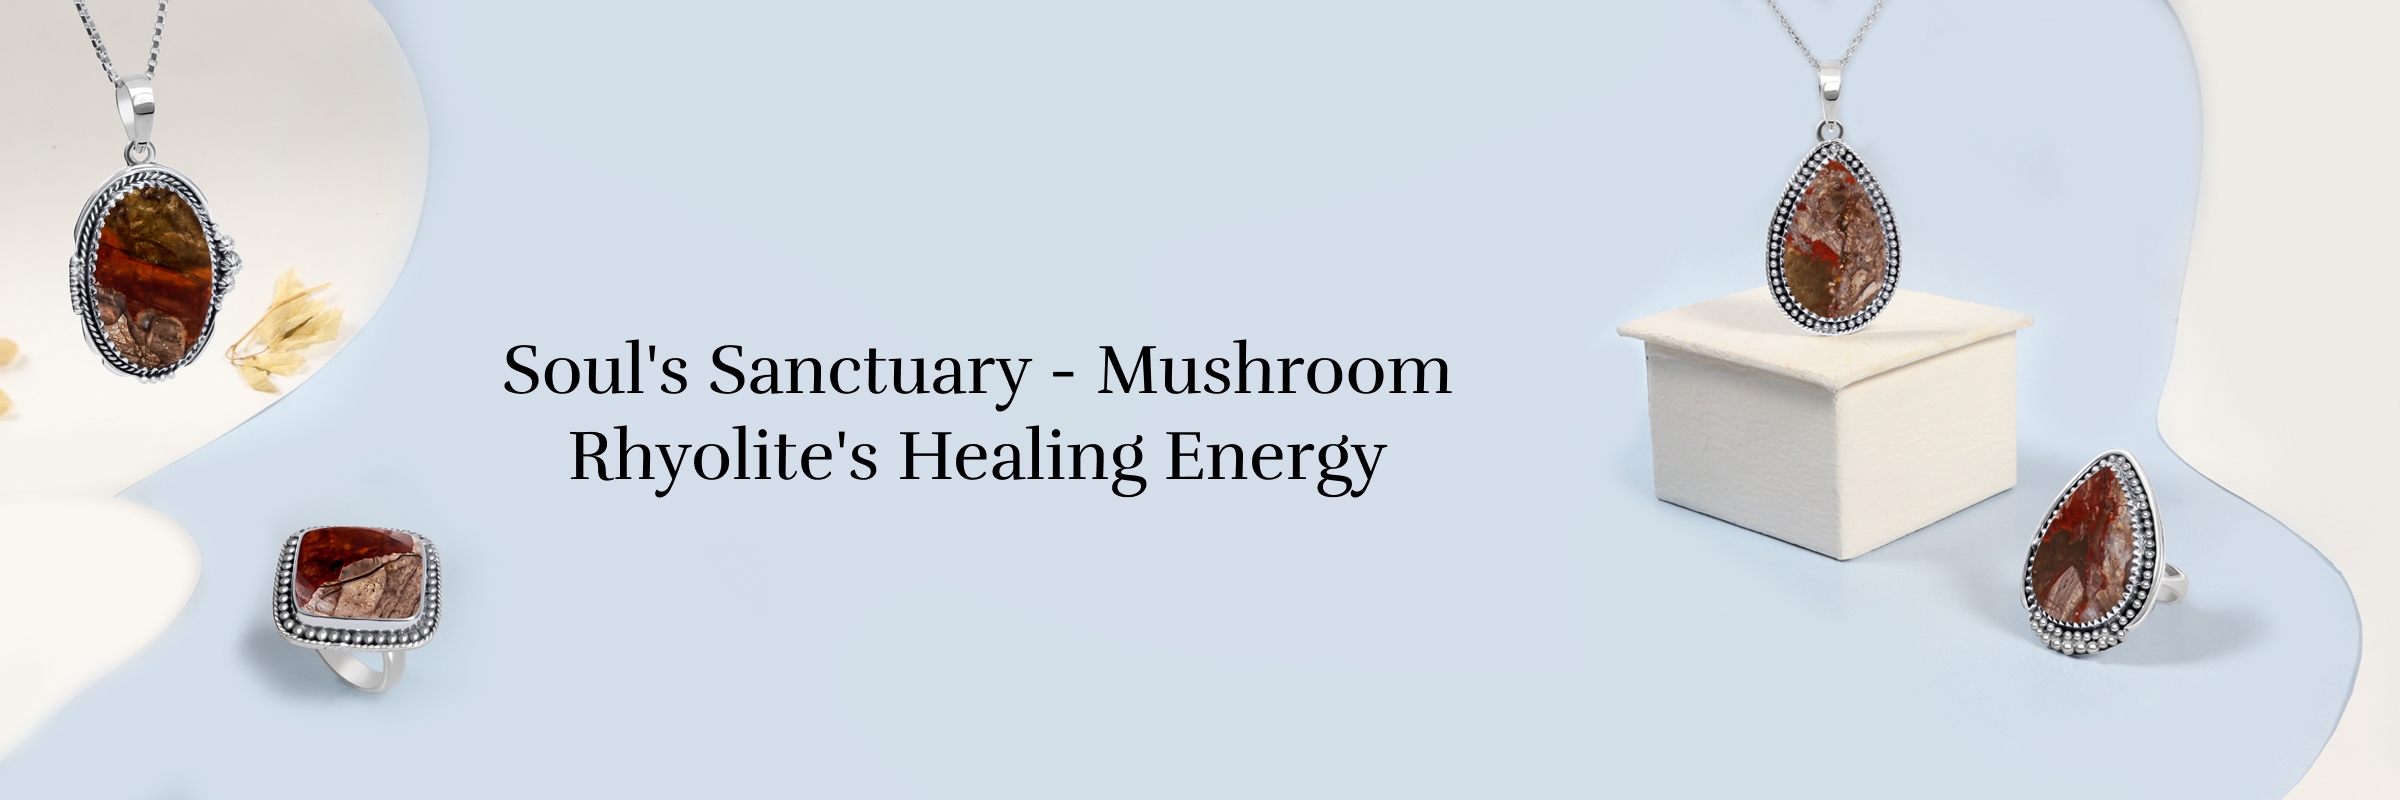 Mushroom Rhyolite: Spiritual Healing properties